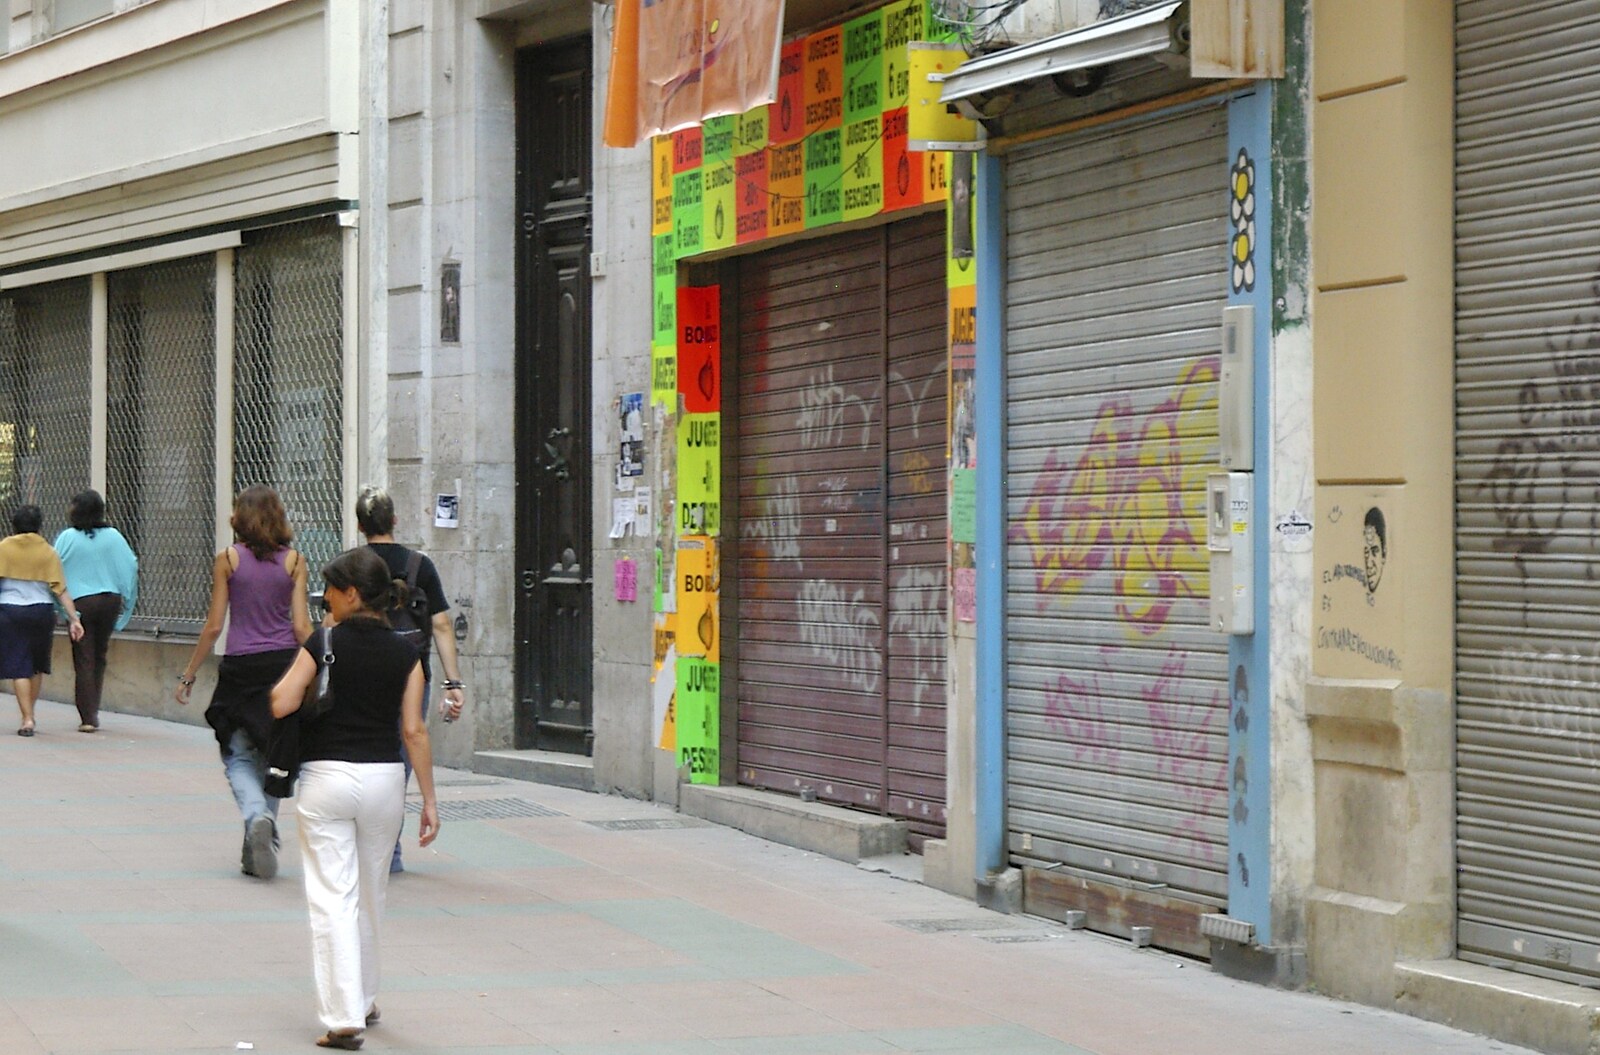 More graffiti from Working at Telefónica, Malaga, Spain - 6th June 2006